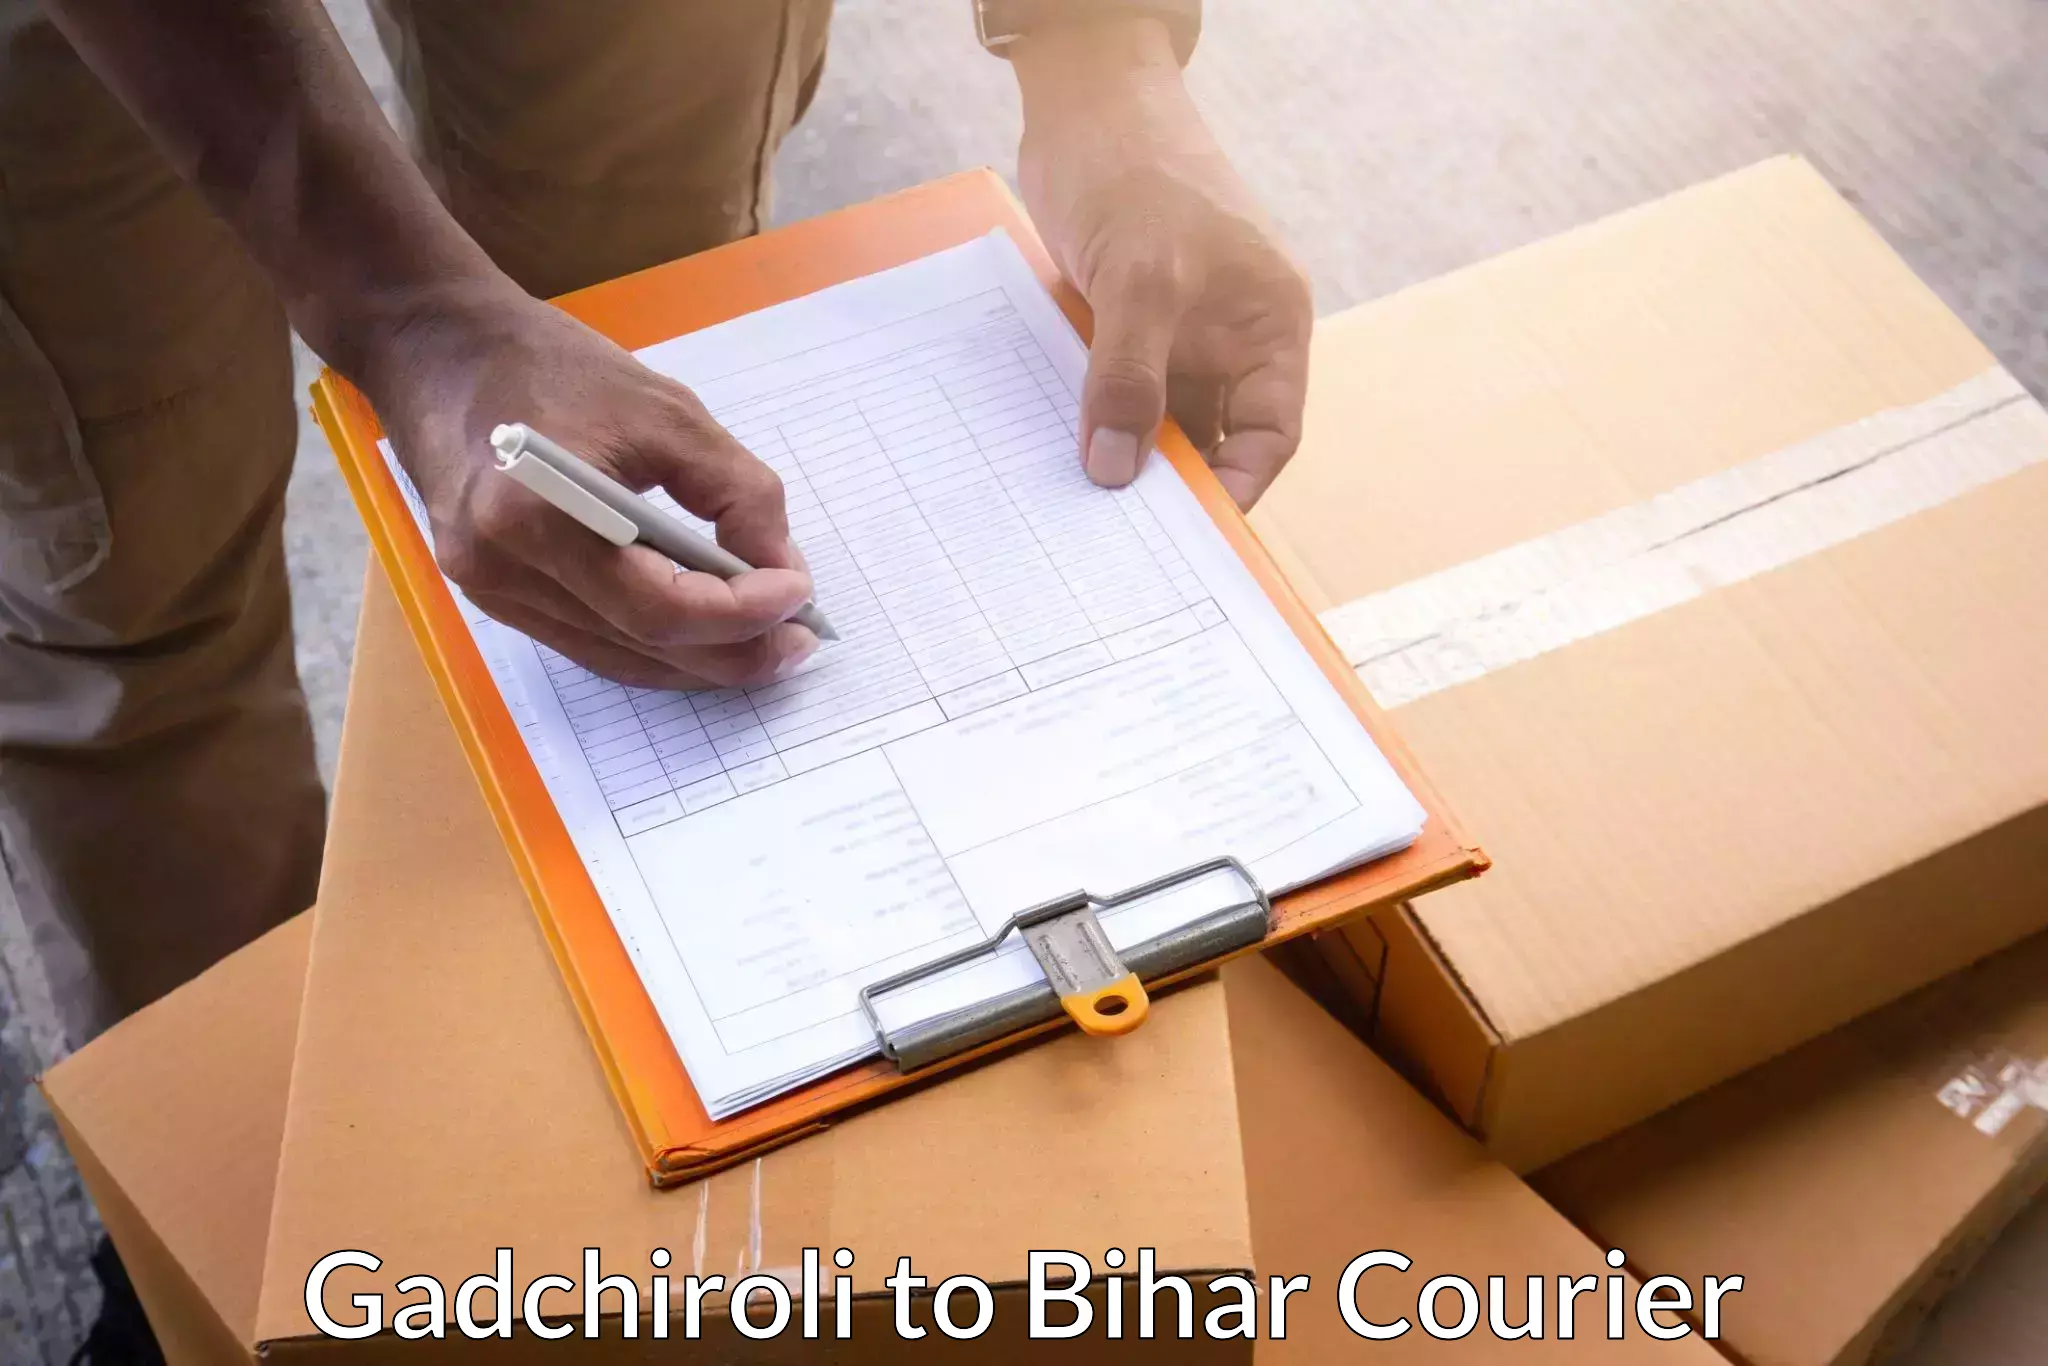 Efficient shipping platforms Gadchiroli to Bhojpur